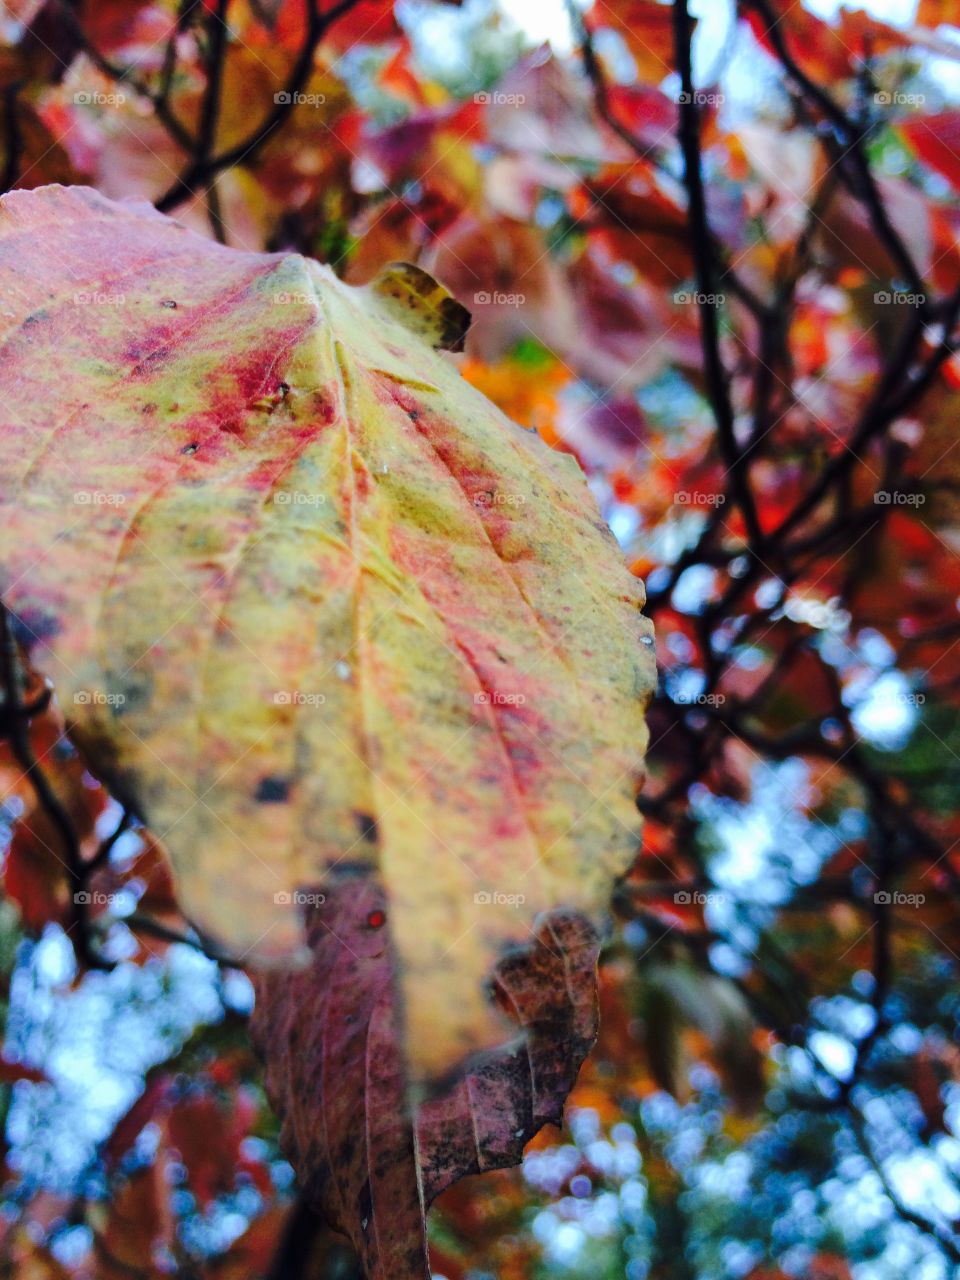 The blurry leaf 